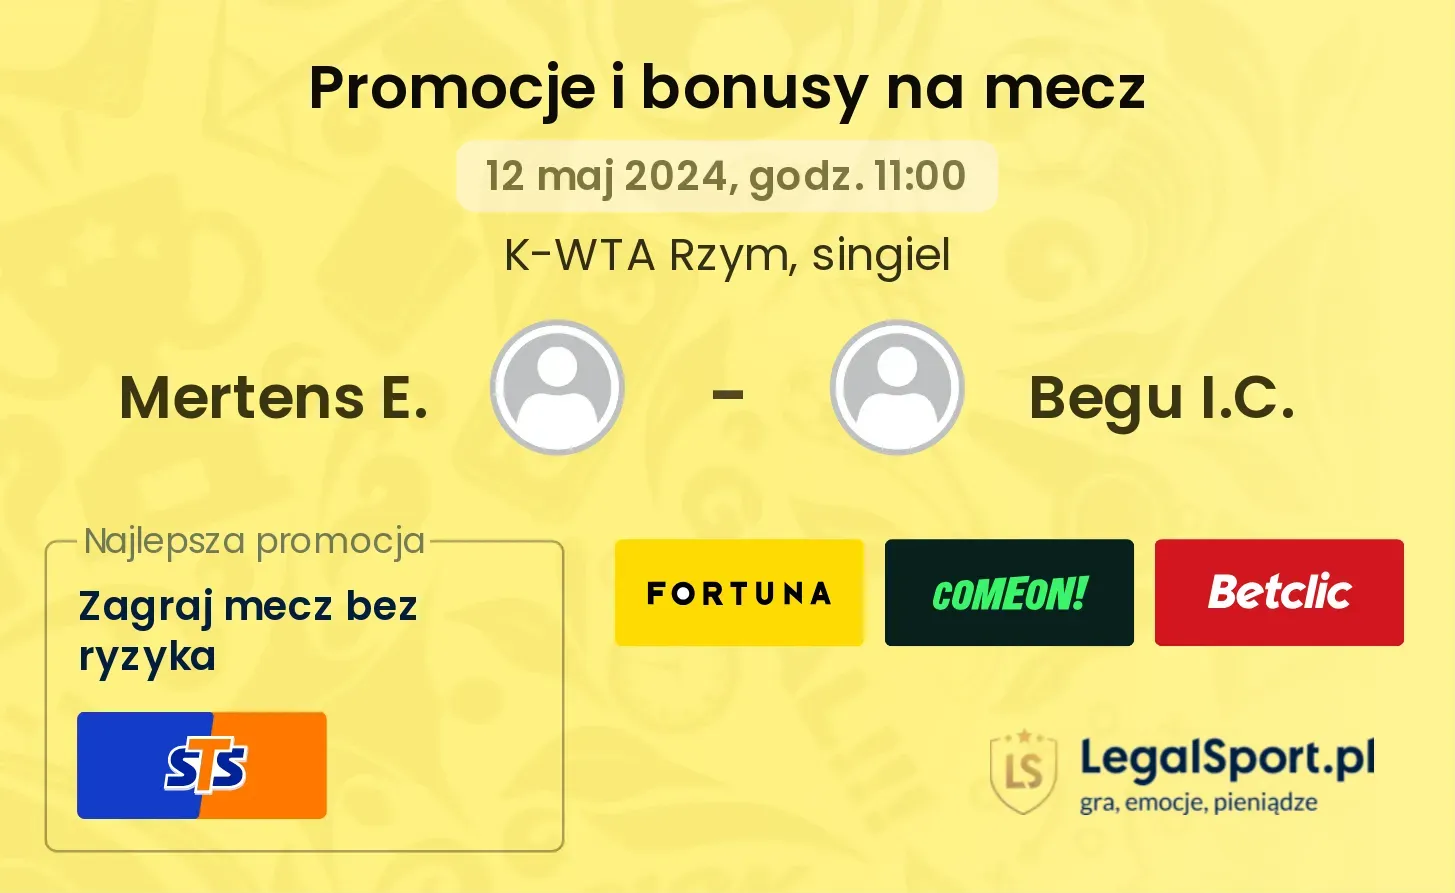 Mertens E. - Begu I.C. promocje bonusy na mecz